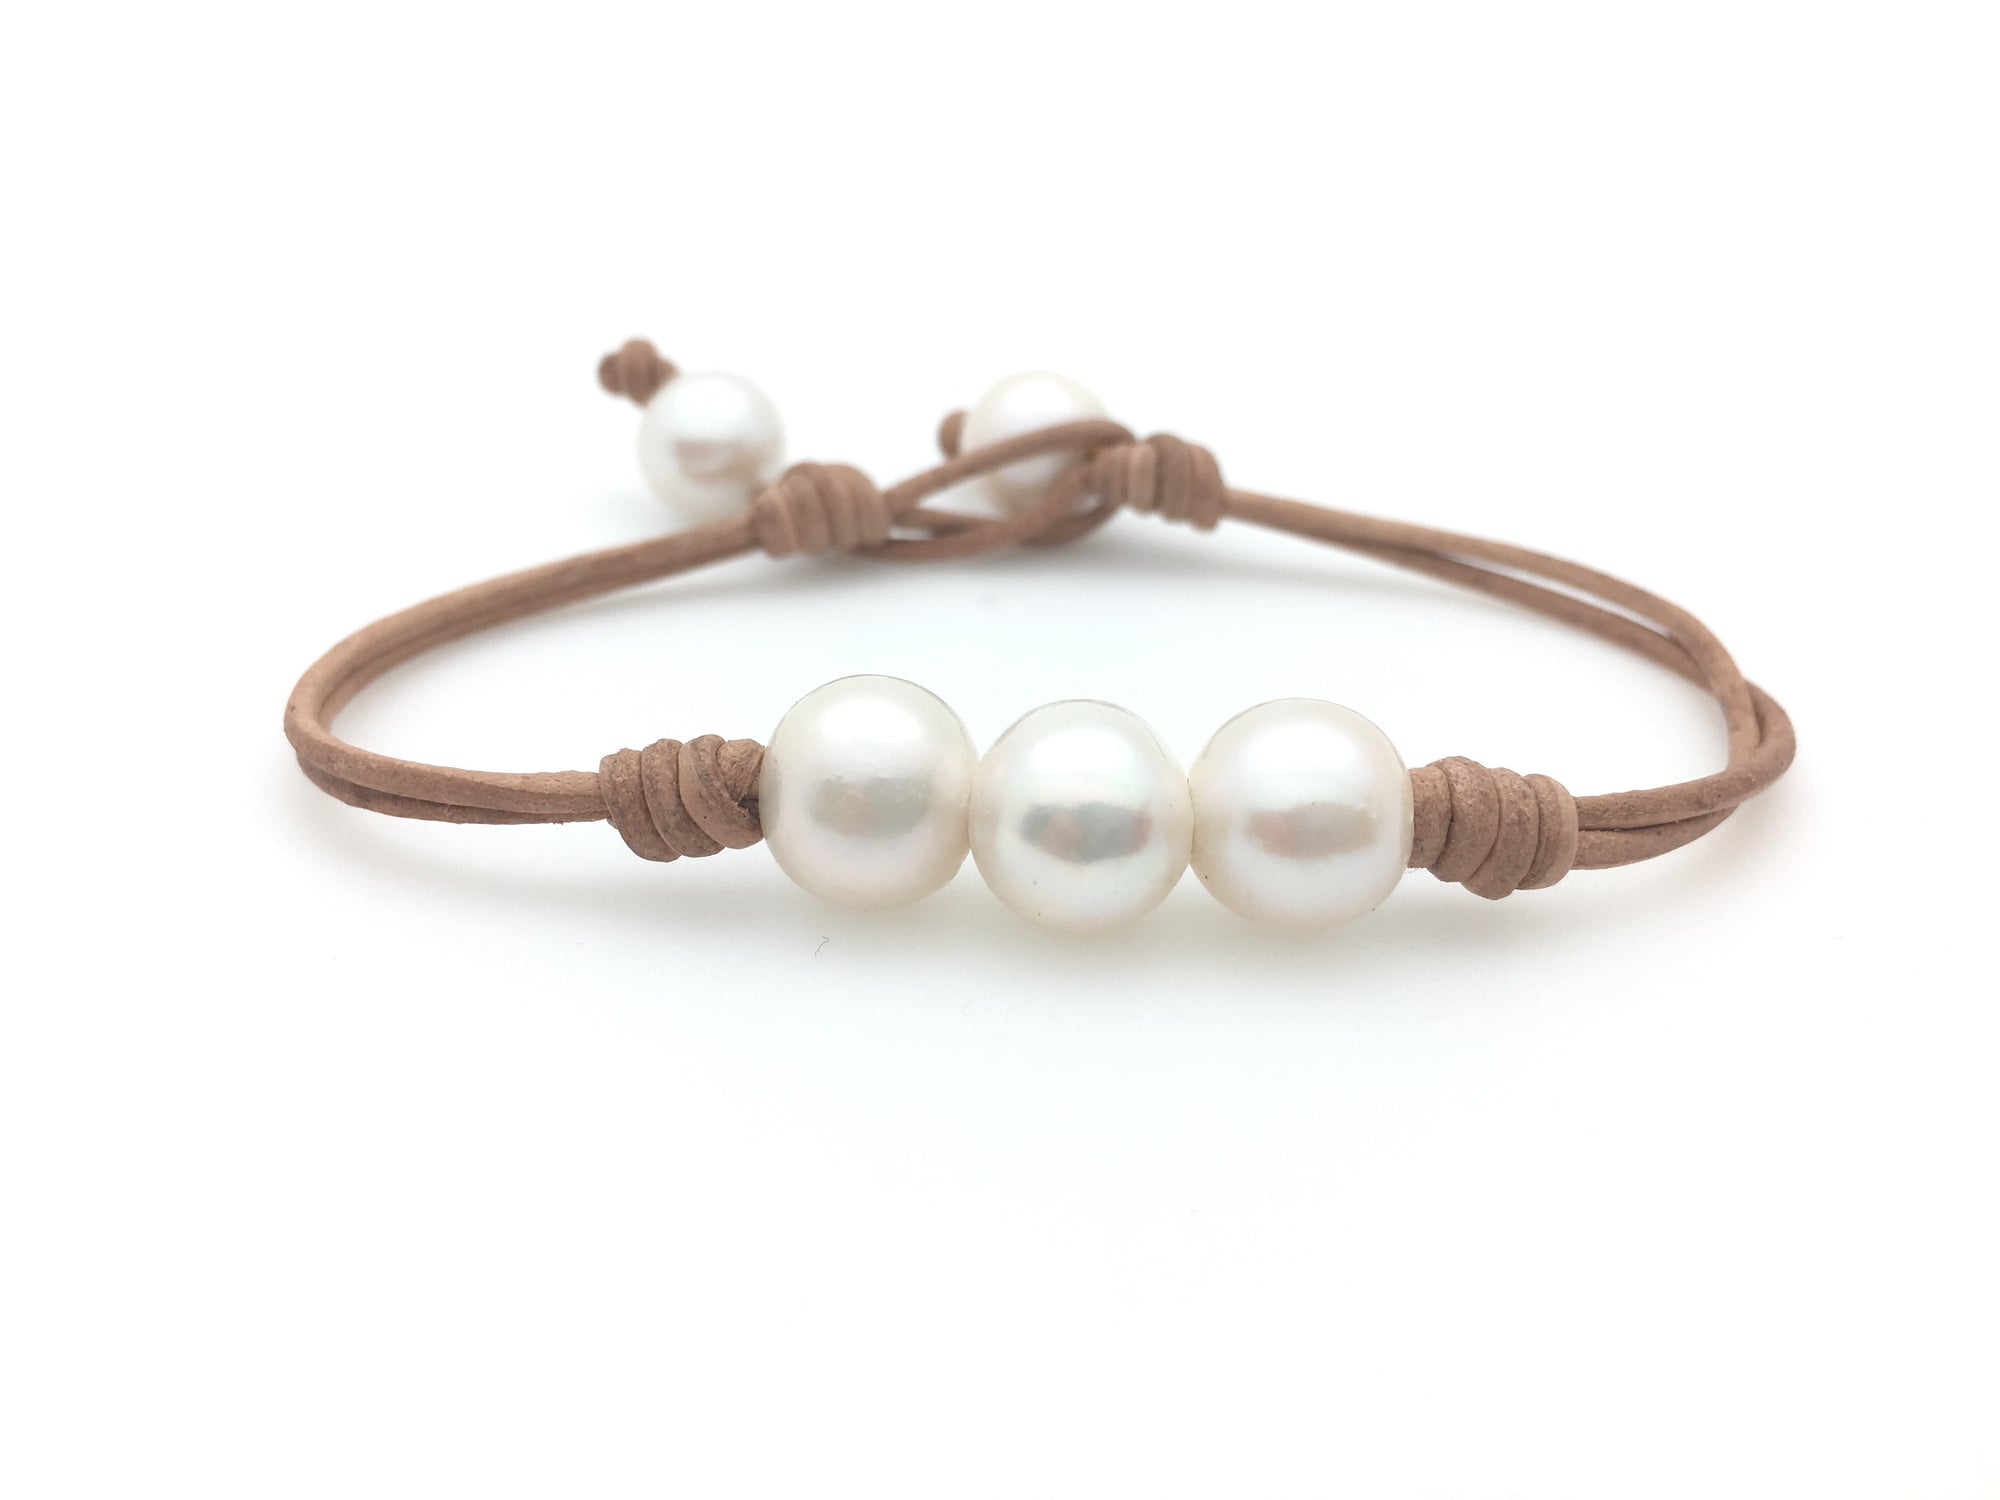 3 pearl bracelet